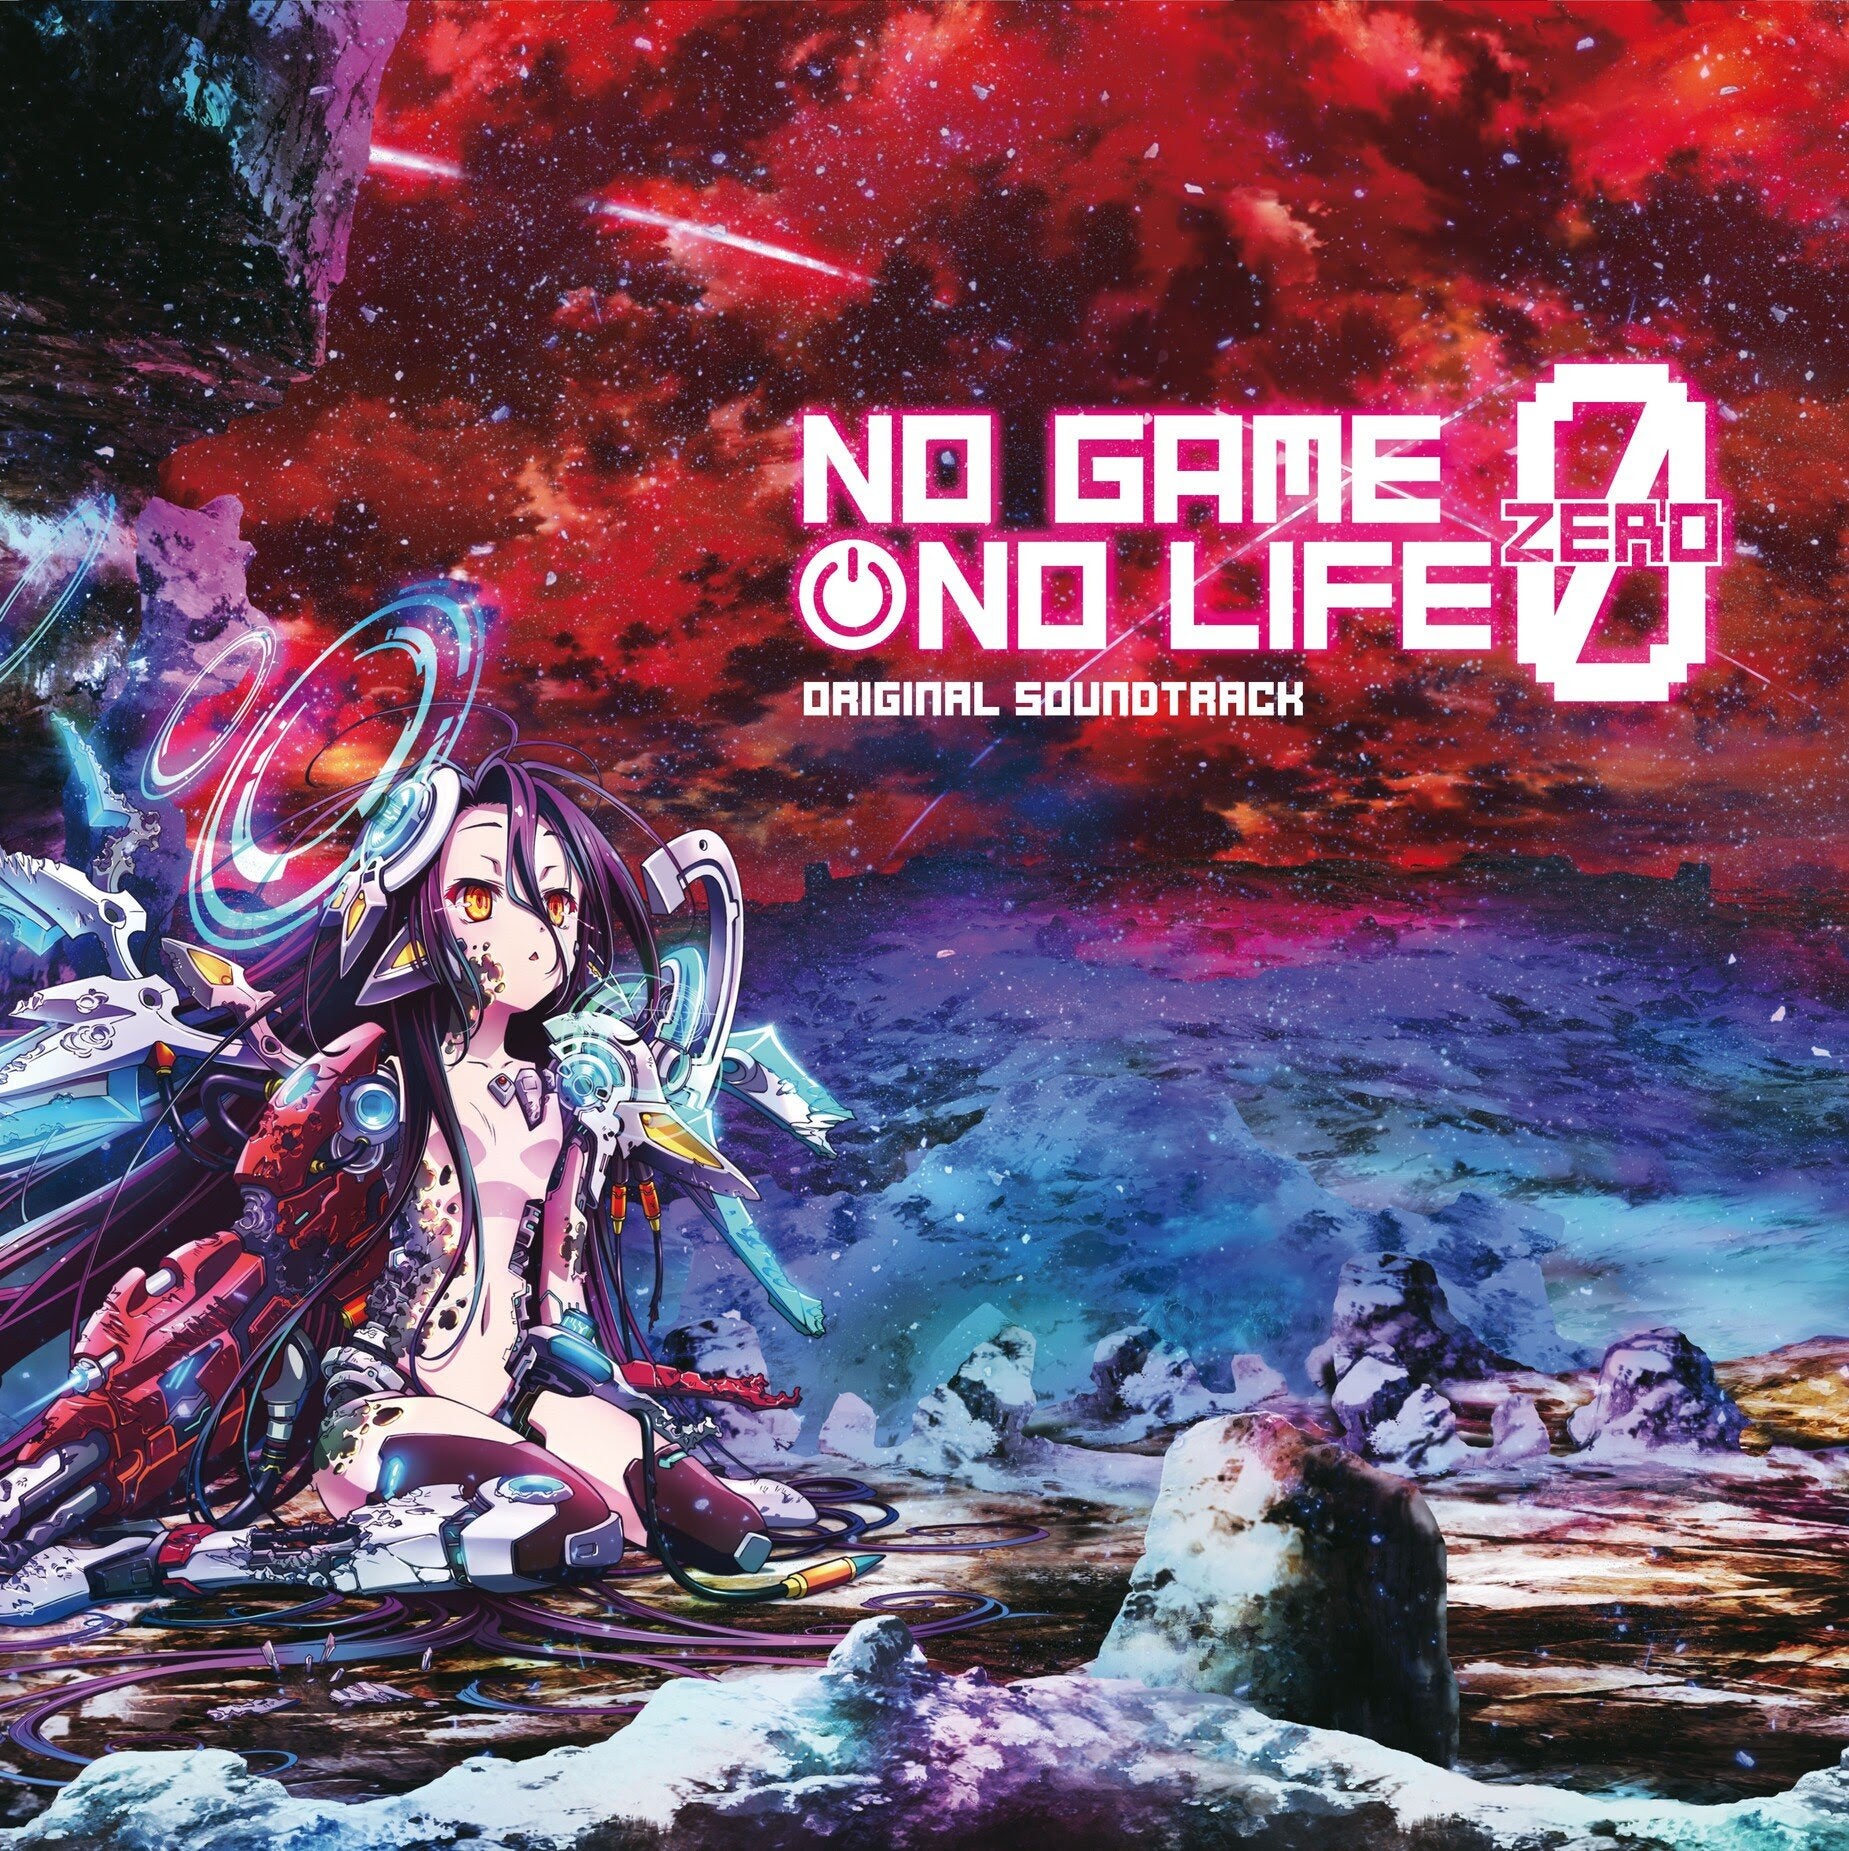 No Game No Life: Zero Original Soundtrack, No Game No Life Wiki